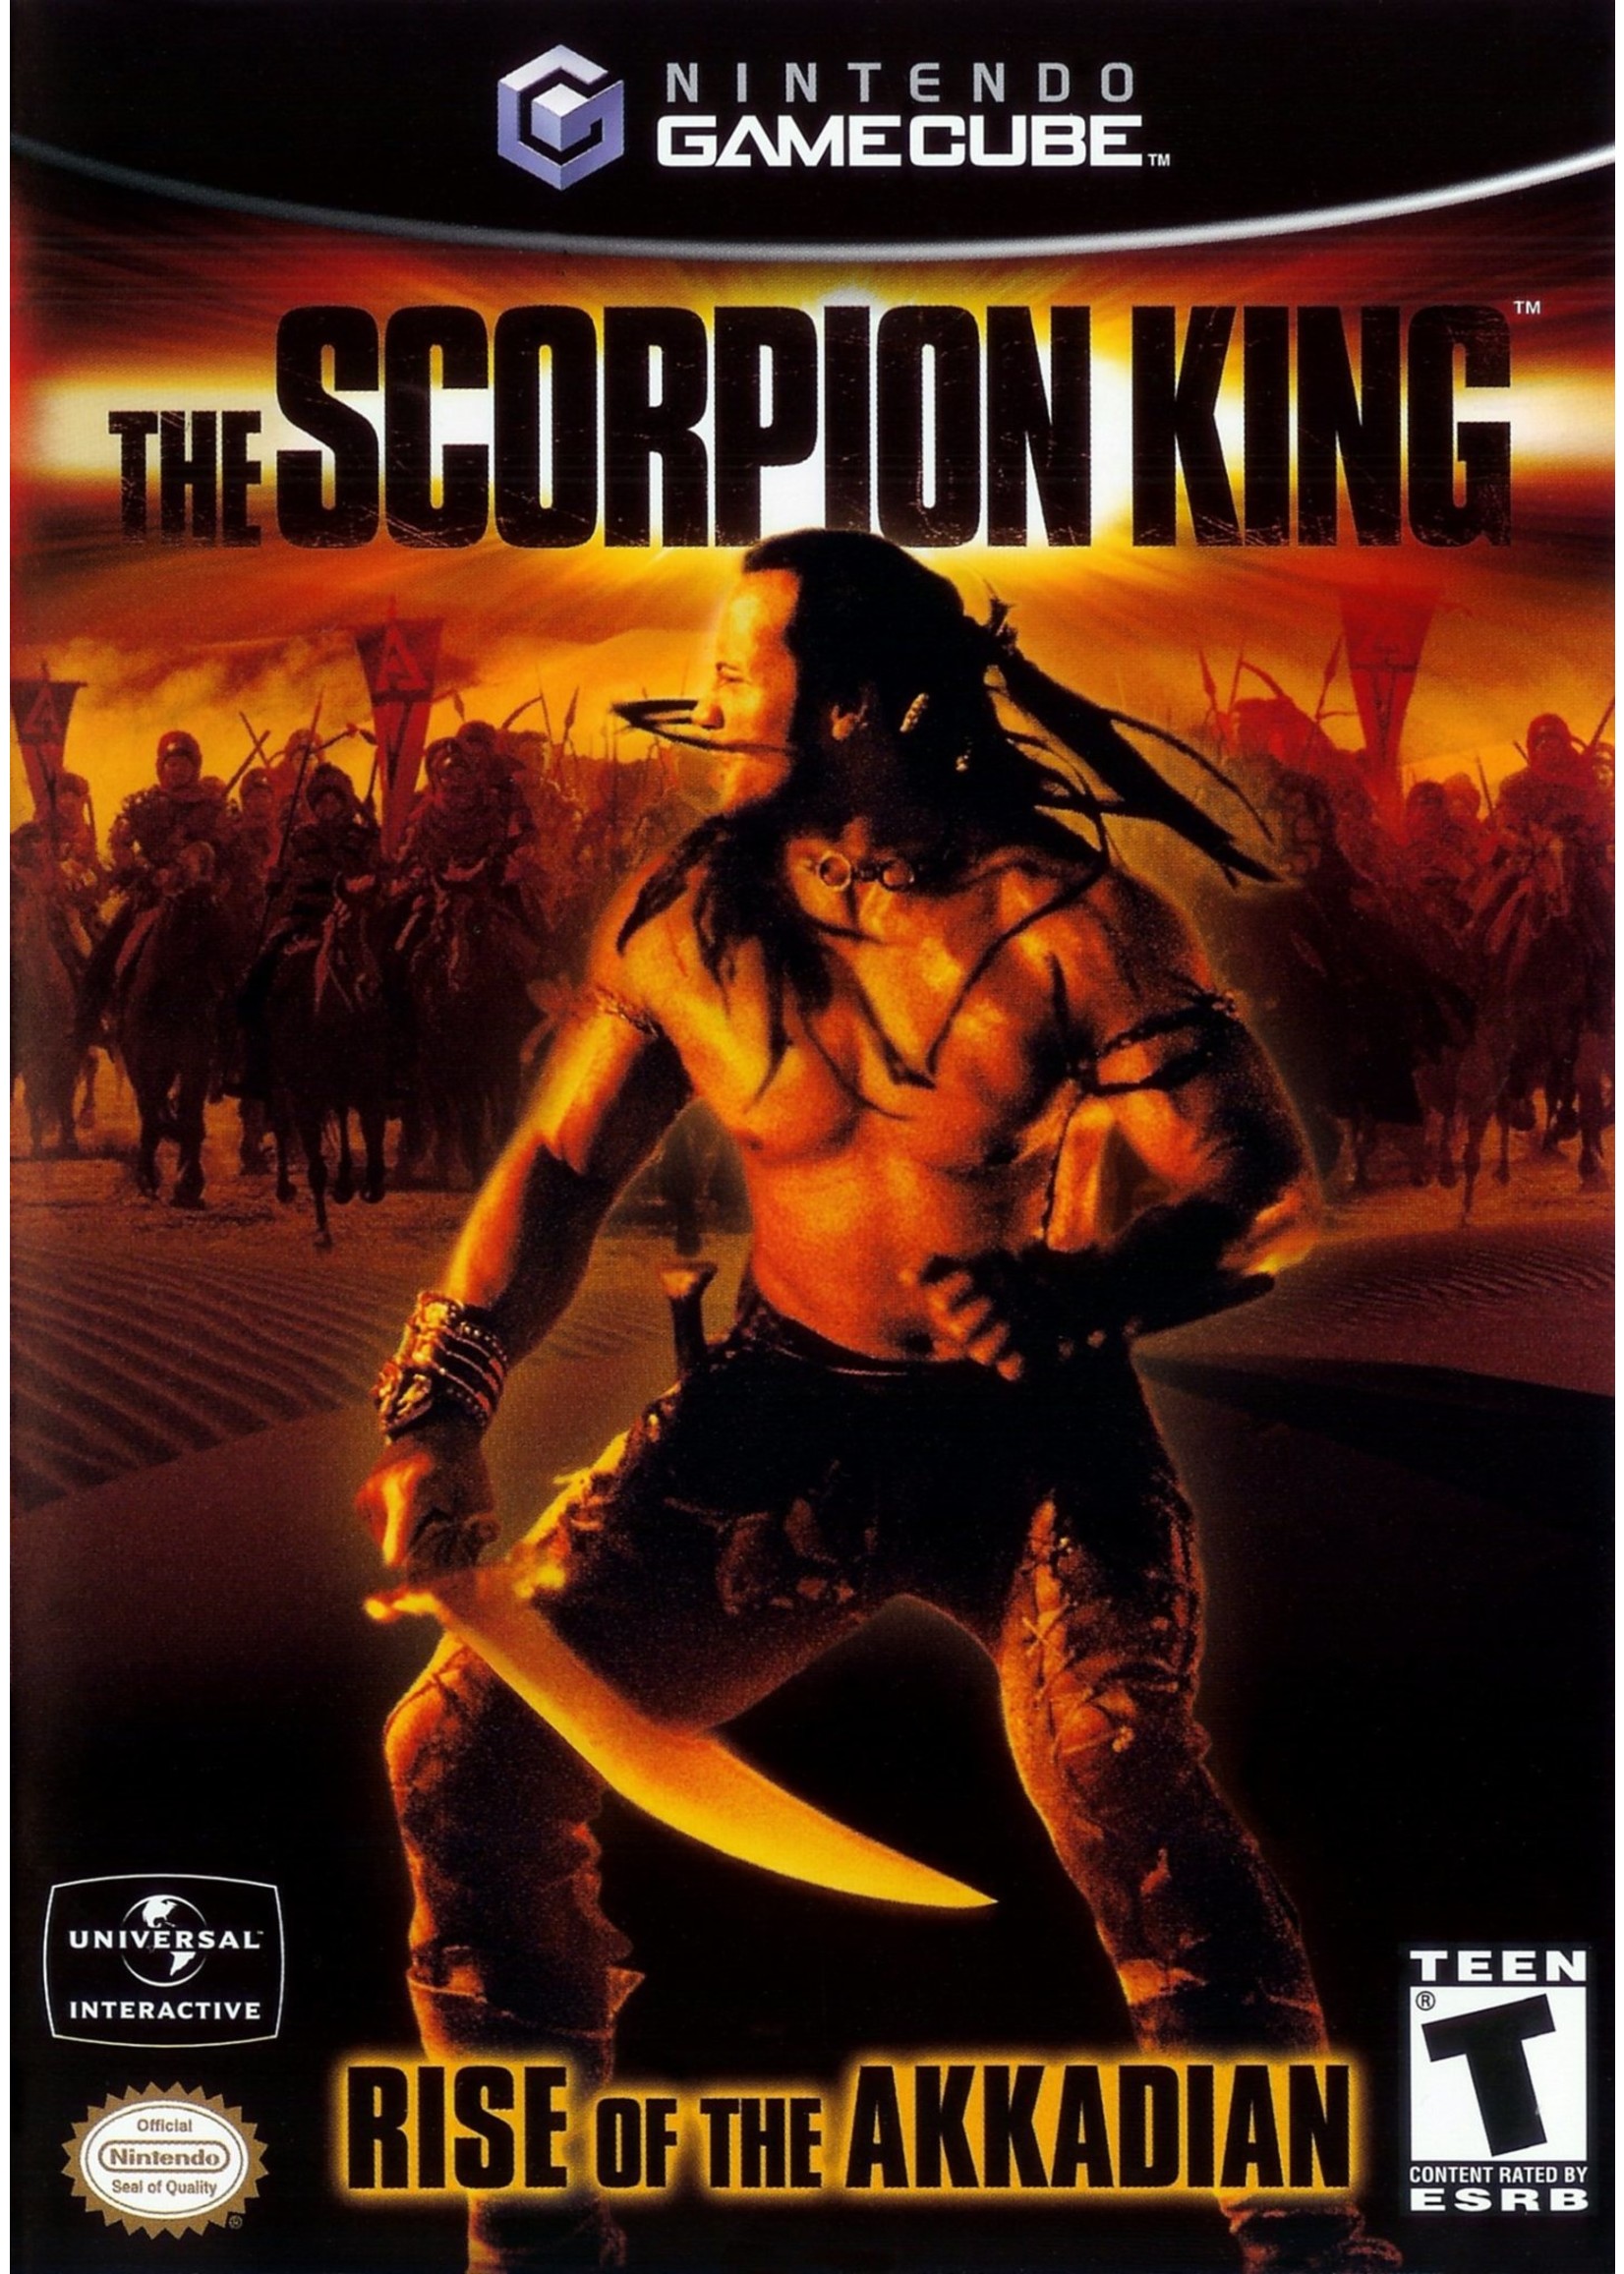 Nintendo Gamecube Scorpion King Rise of the Akkadian, The